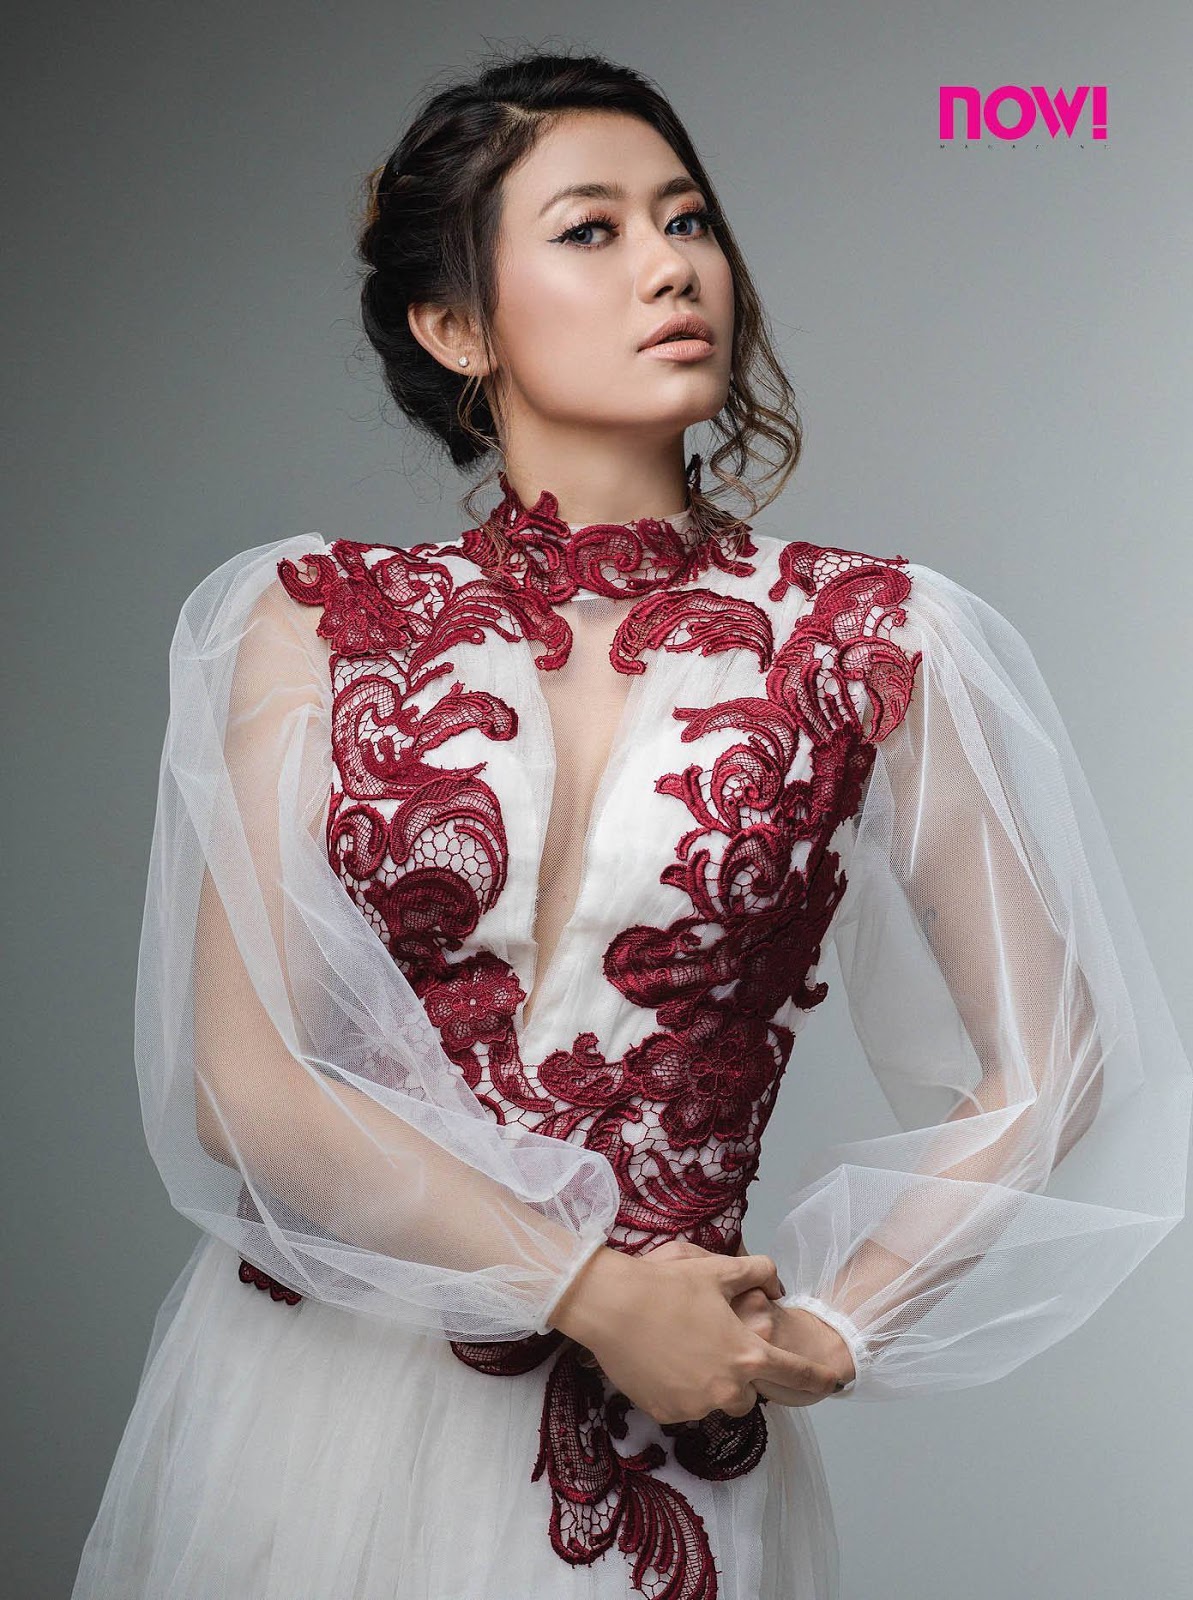 Thinzar Wint Kyaw Amazing Beauty Photoshoot Now Magazine 